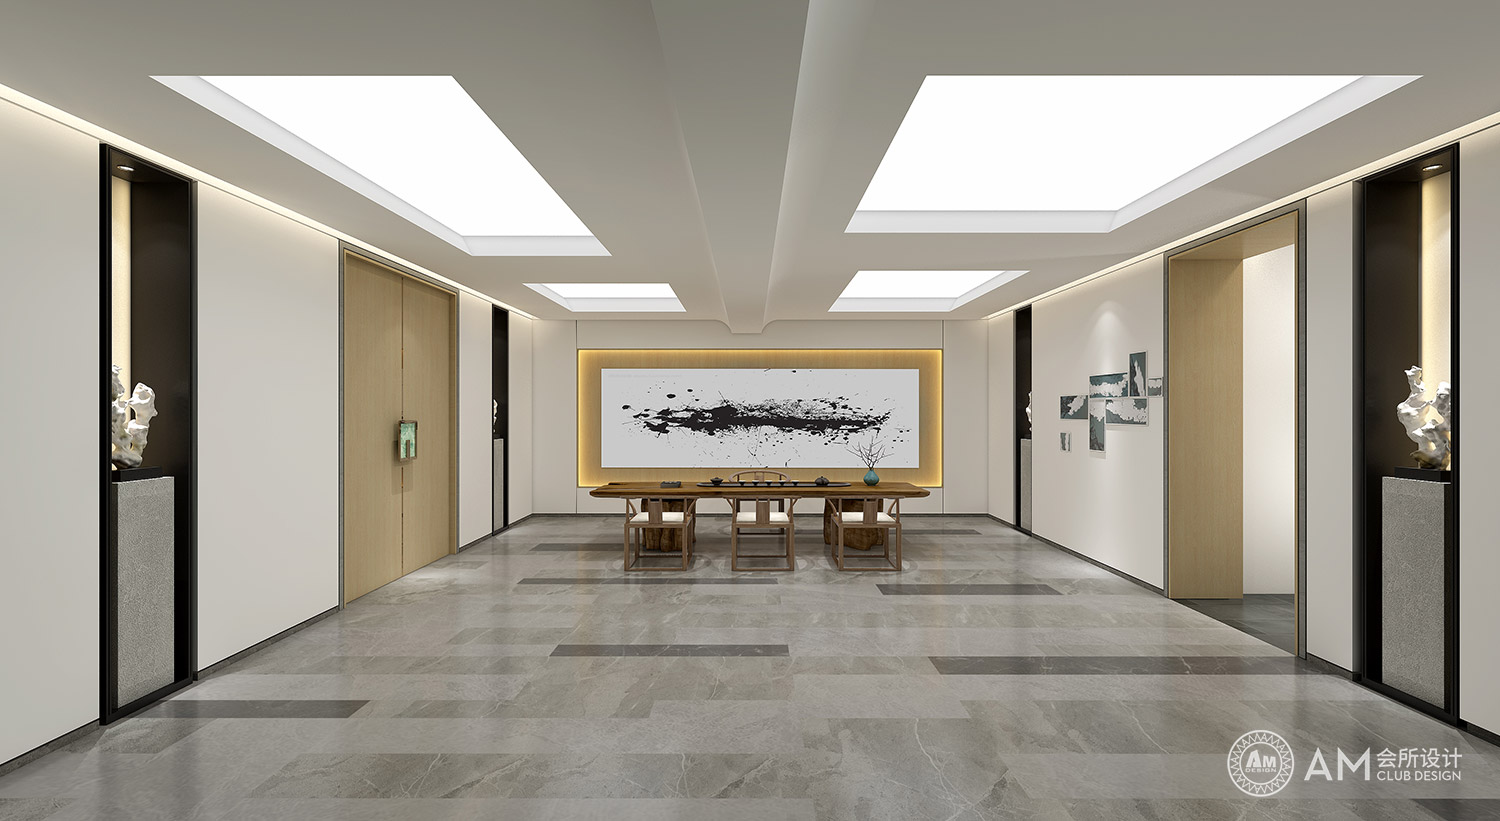 AM DESIGN | Landscape design of the corridor of the Beijing Friendship Hotel